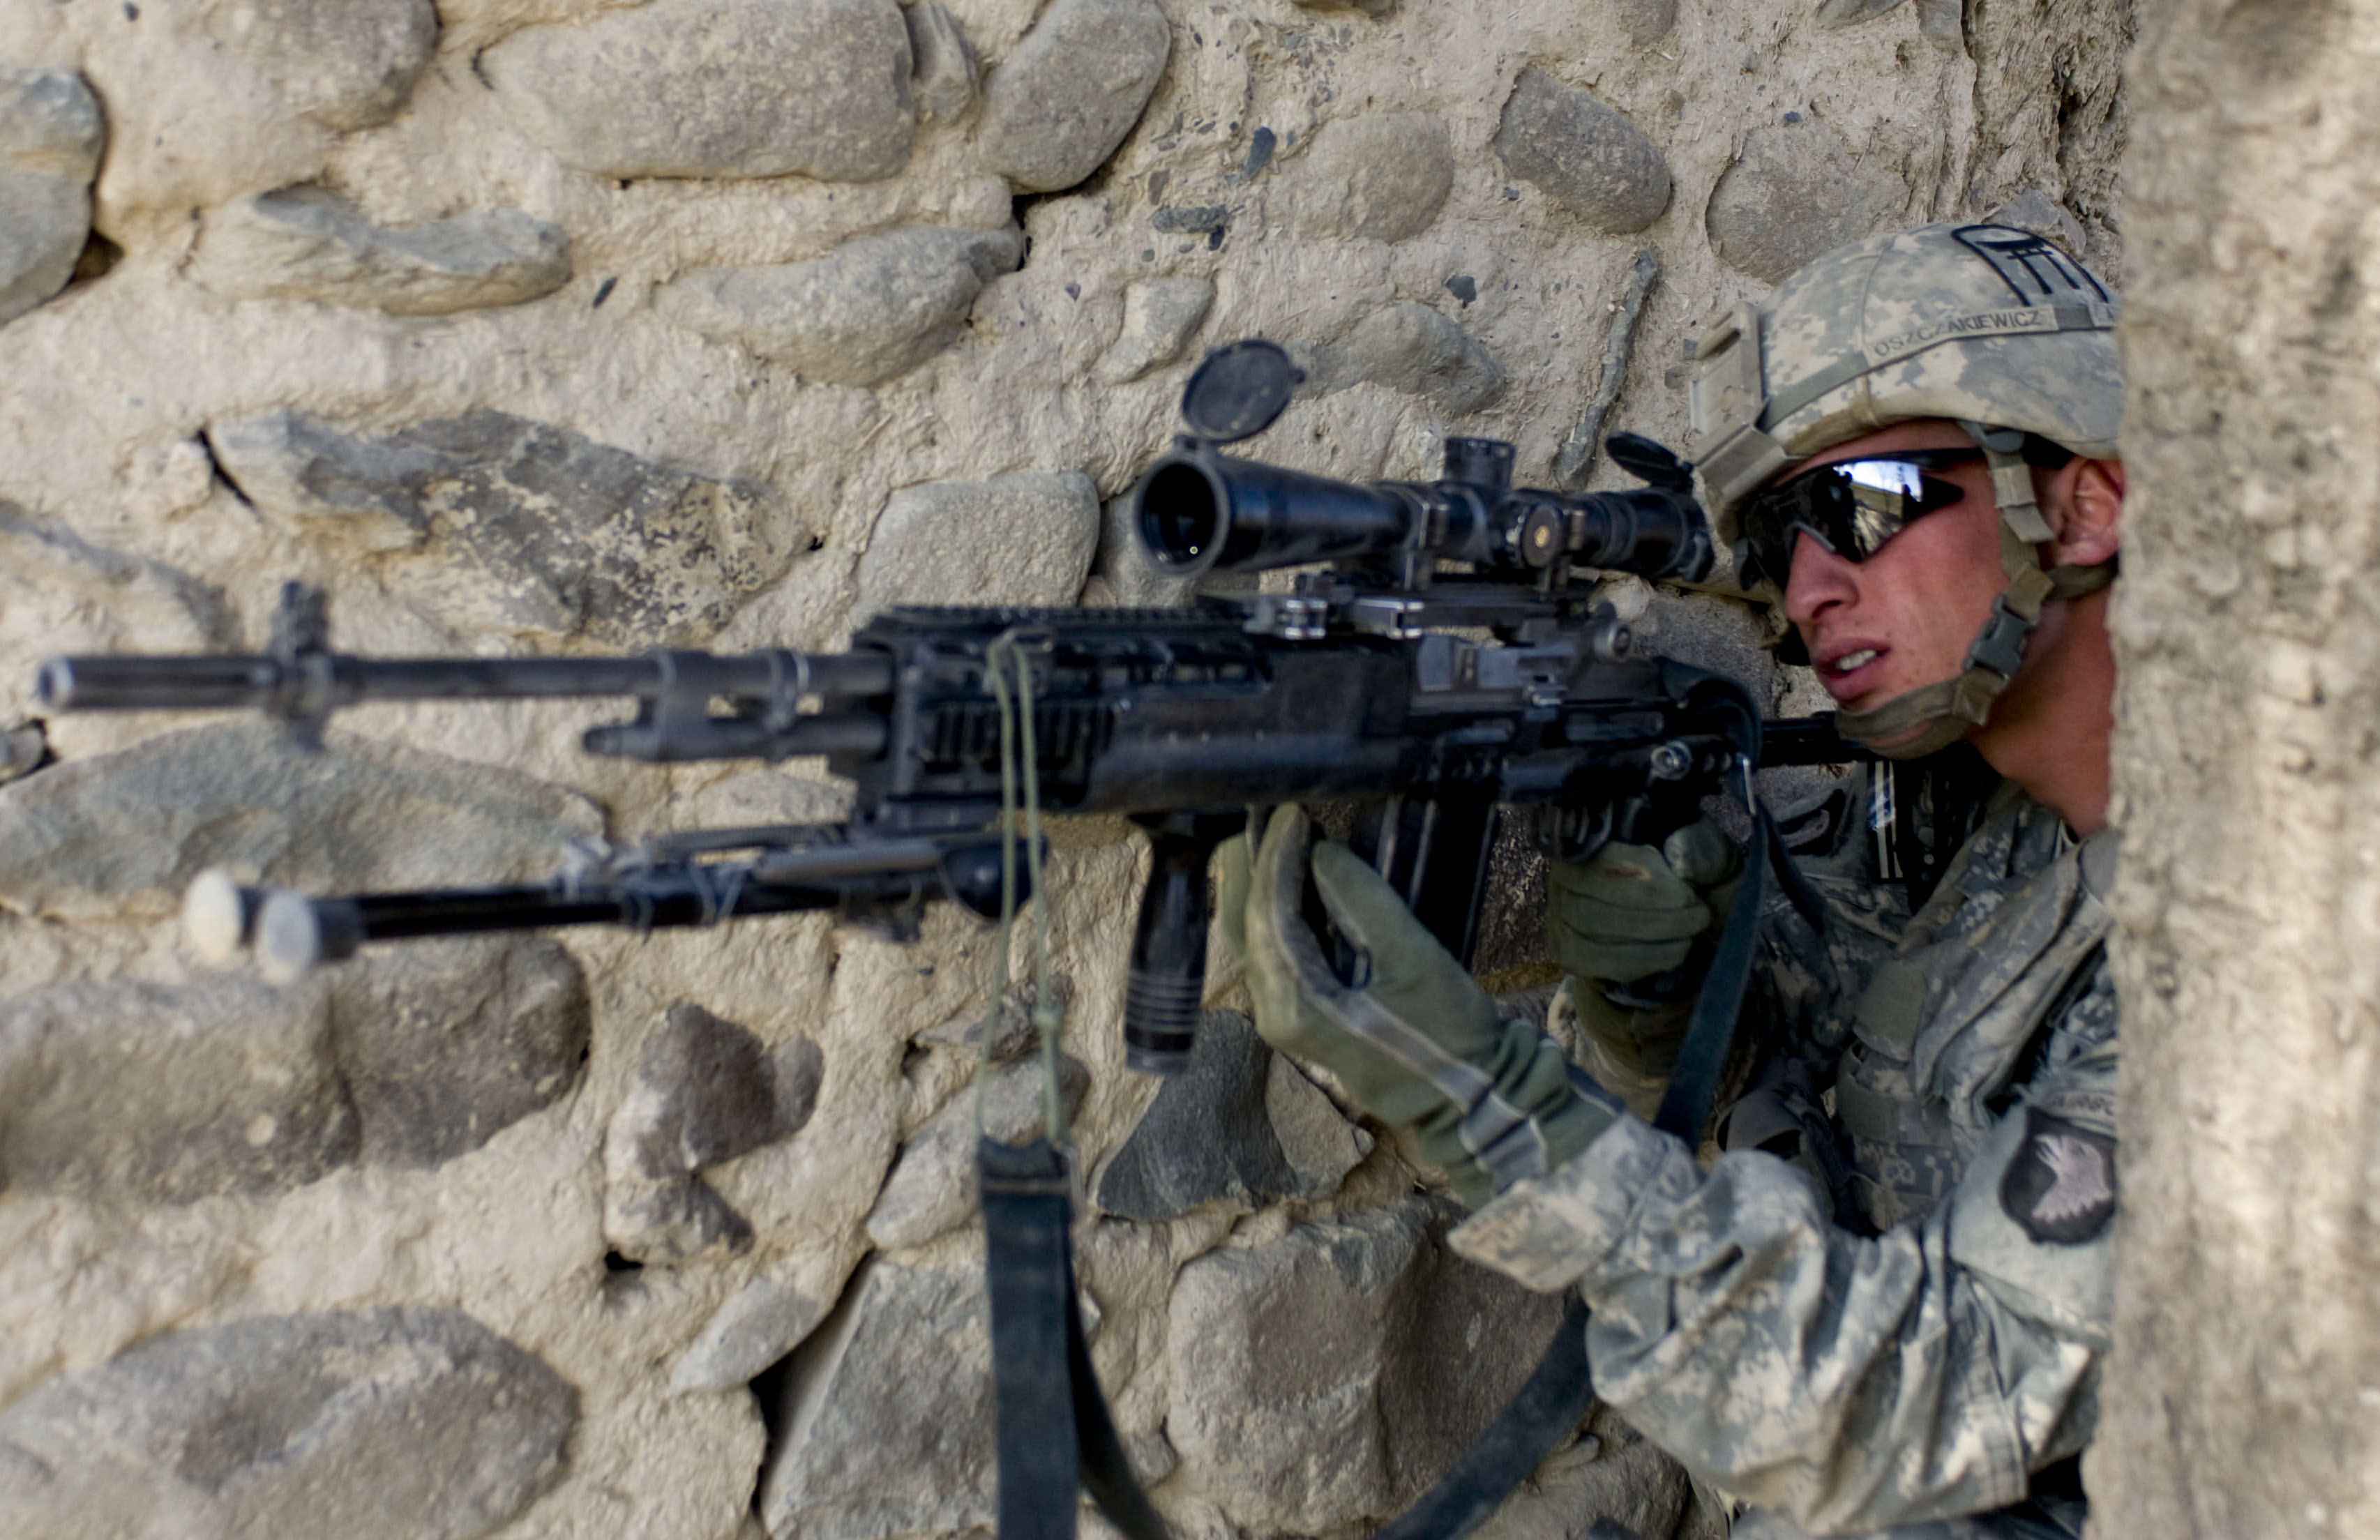 File:Flickr - The U.S. Army - Taking aim.jpg - Wikimedia Commons